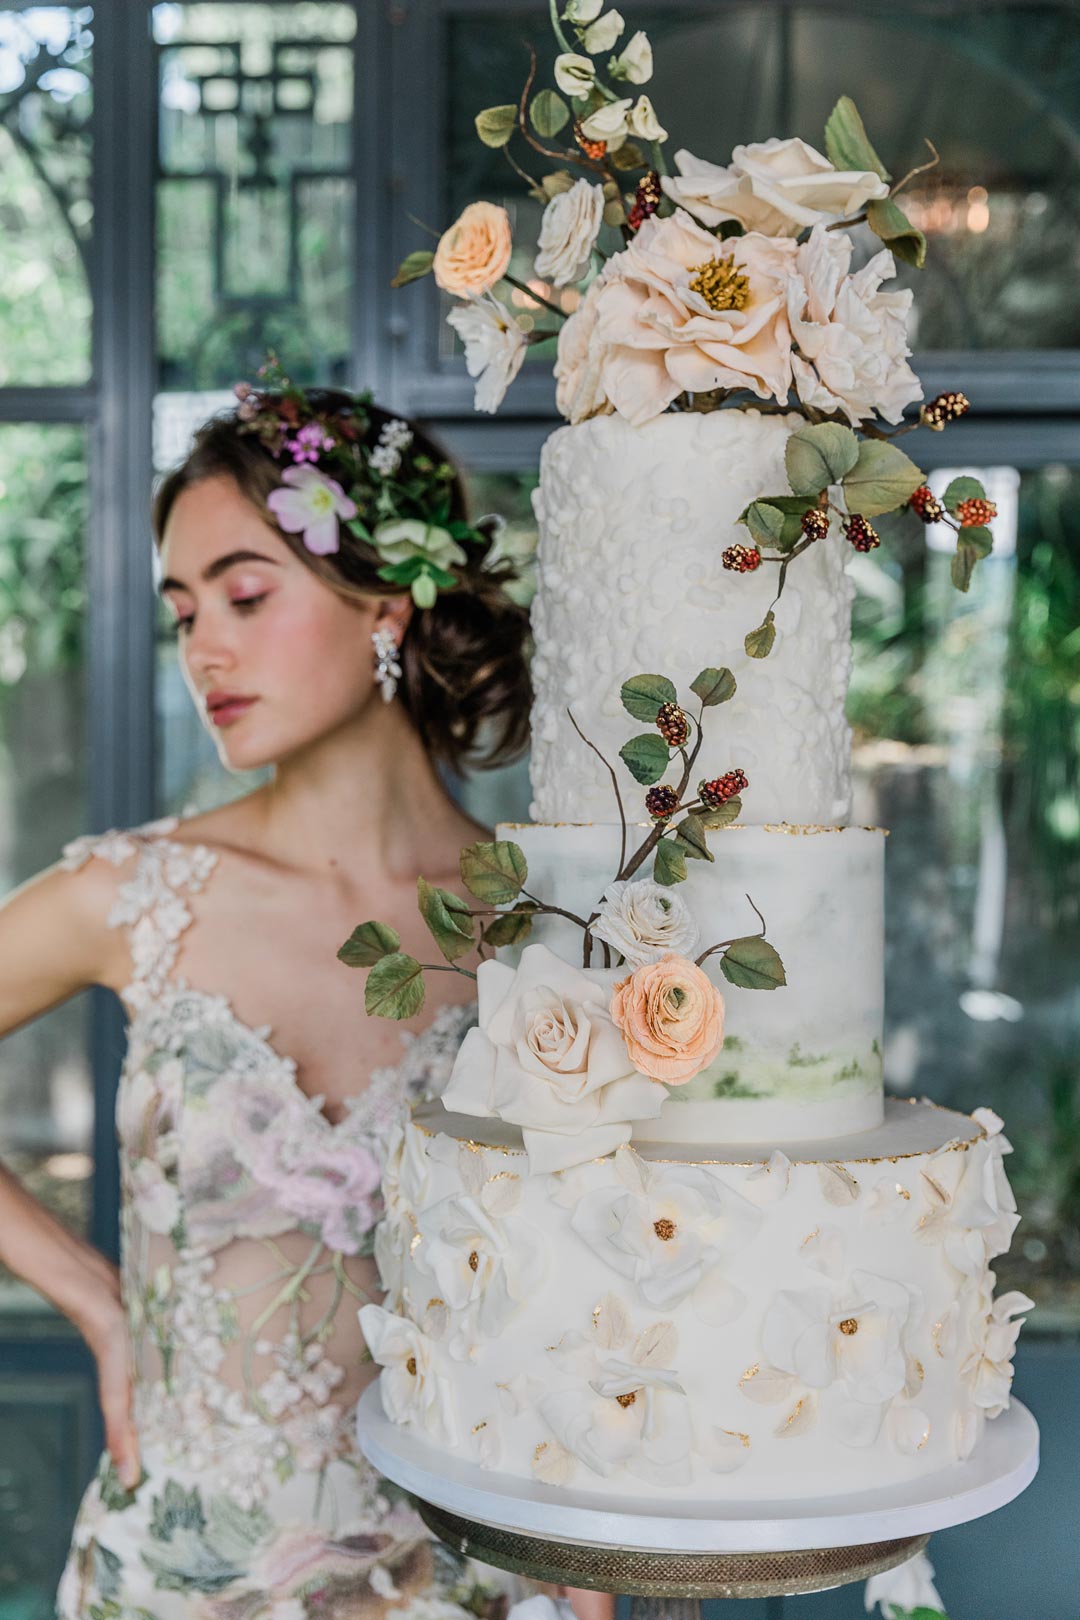 Model in Claire Pettbone Wedding Dress design with floral wedding cake design